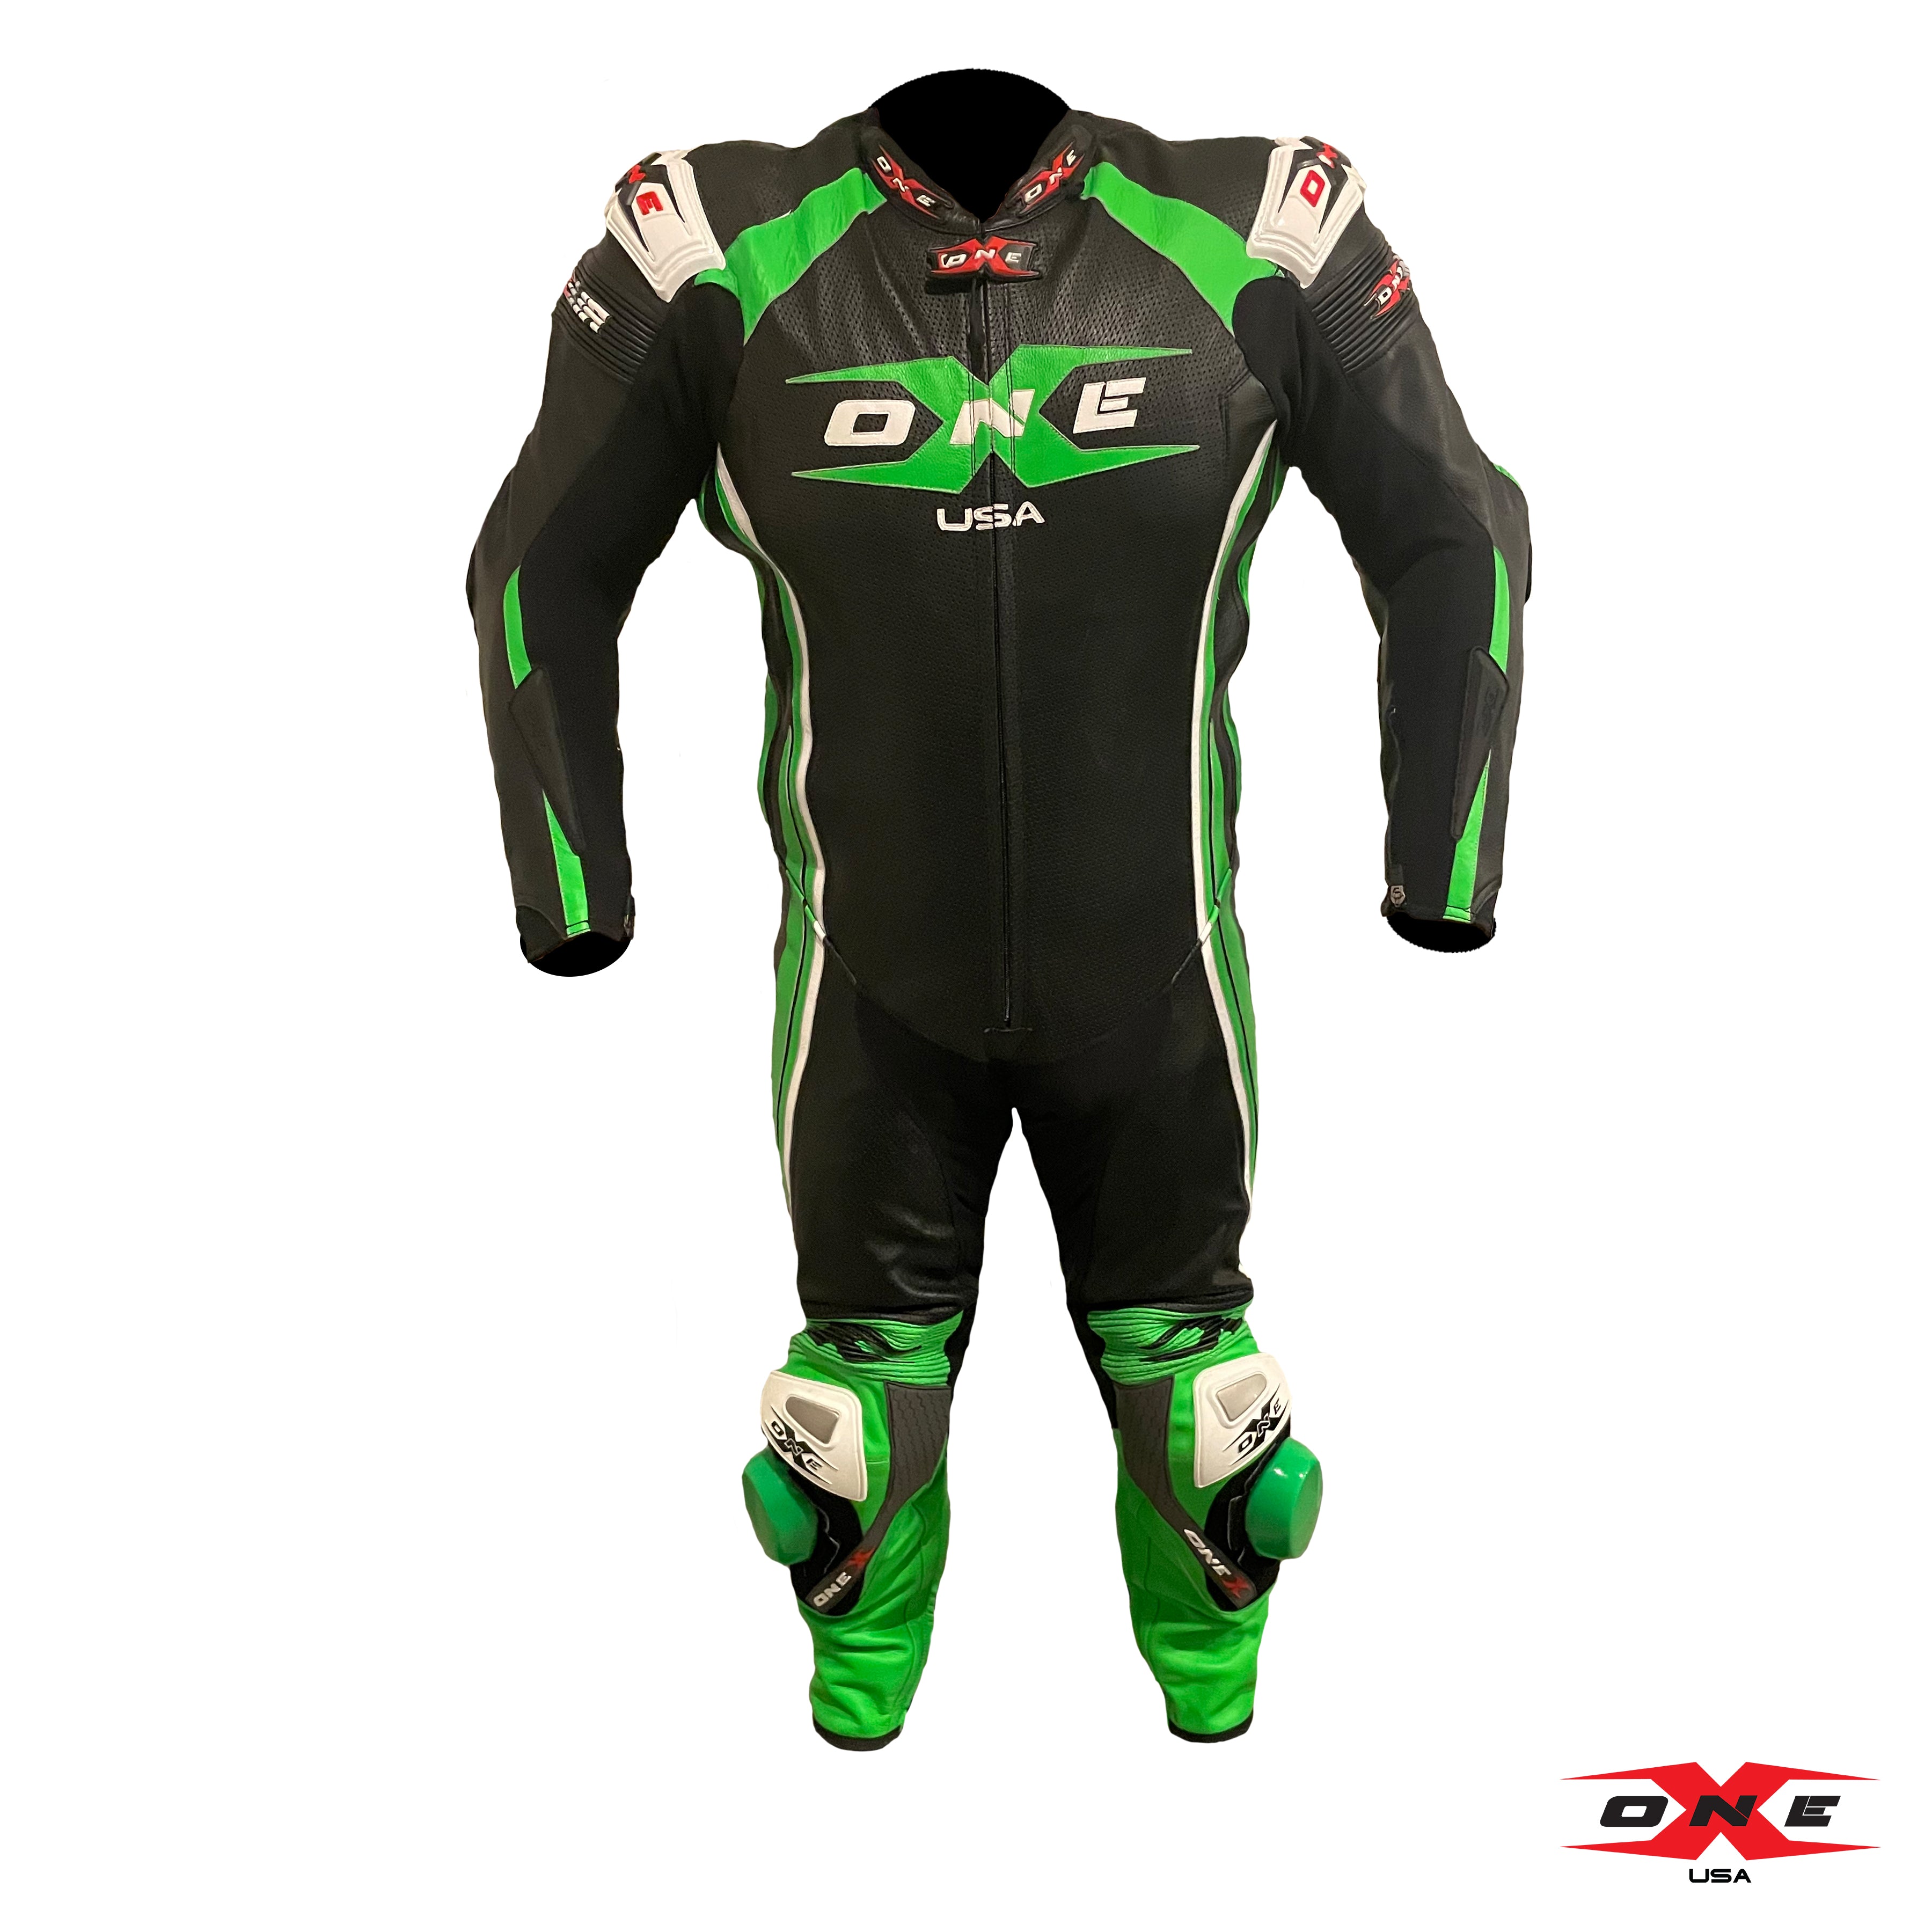 OneX USA XR22 Airbag Ready Pro Race Suit - Black/Highlight Green